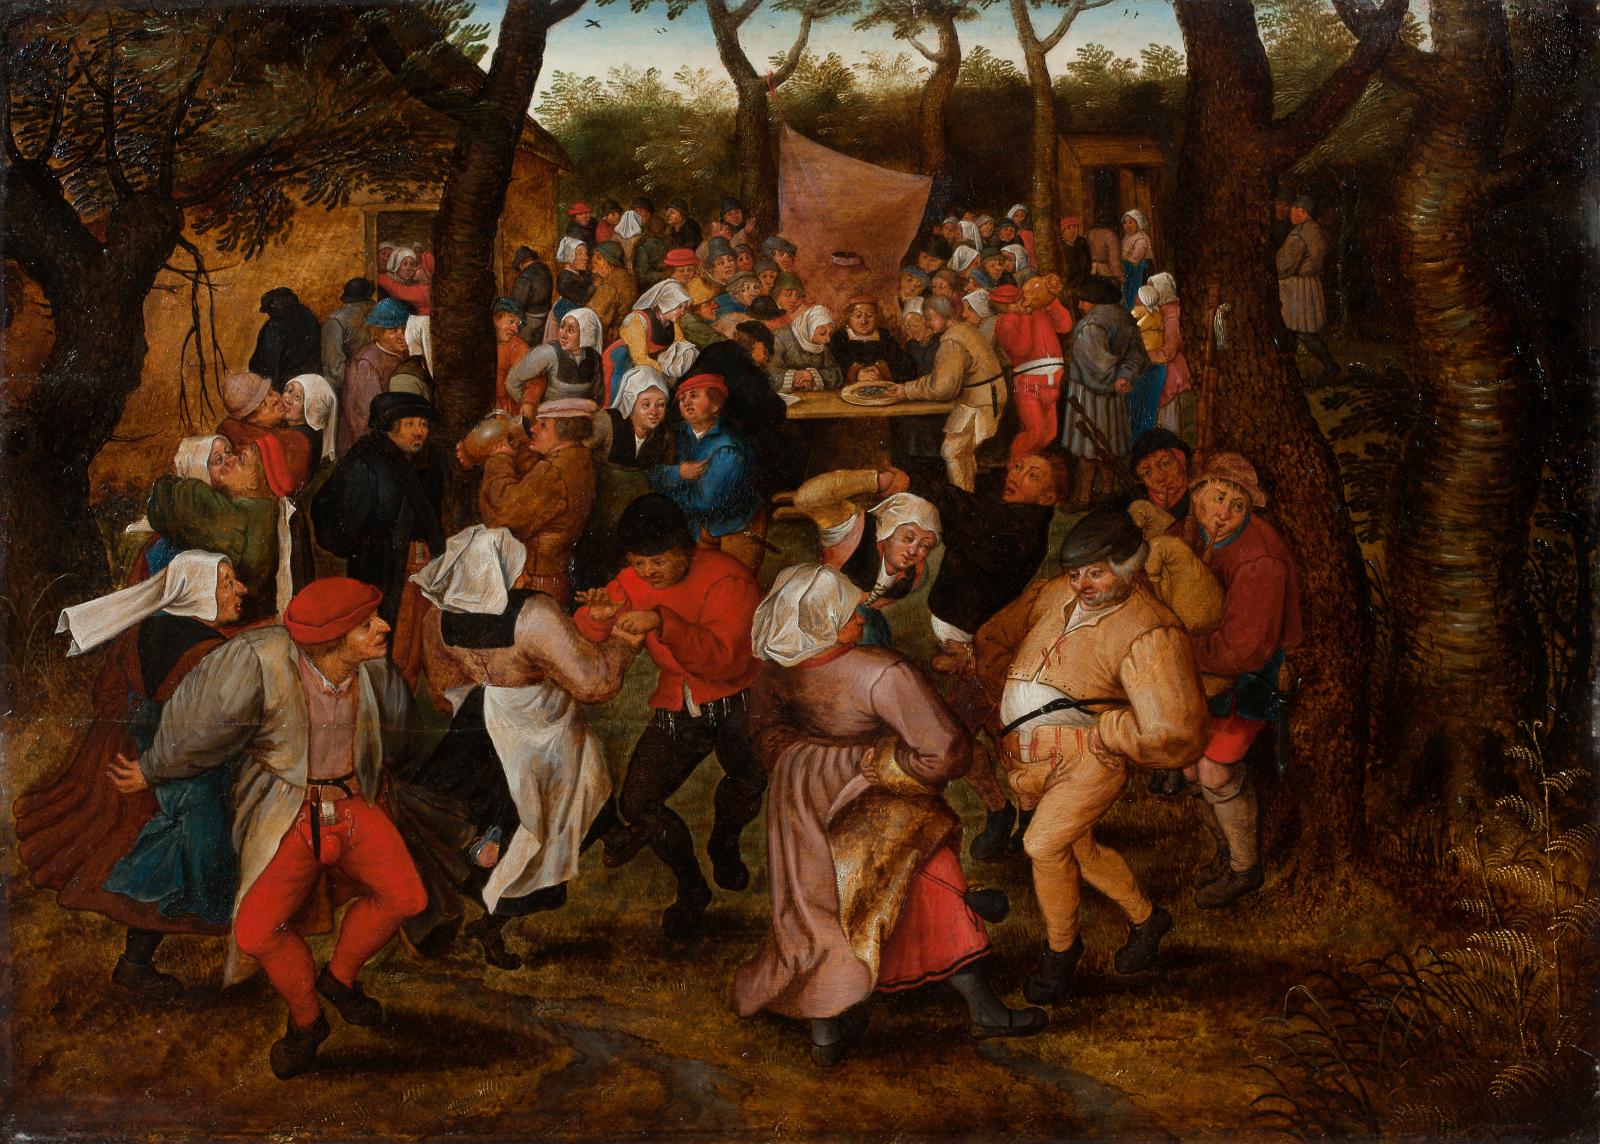 Pieter II Bruegel sur un rythme effréné